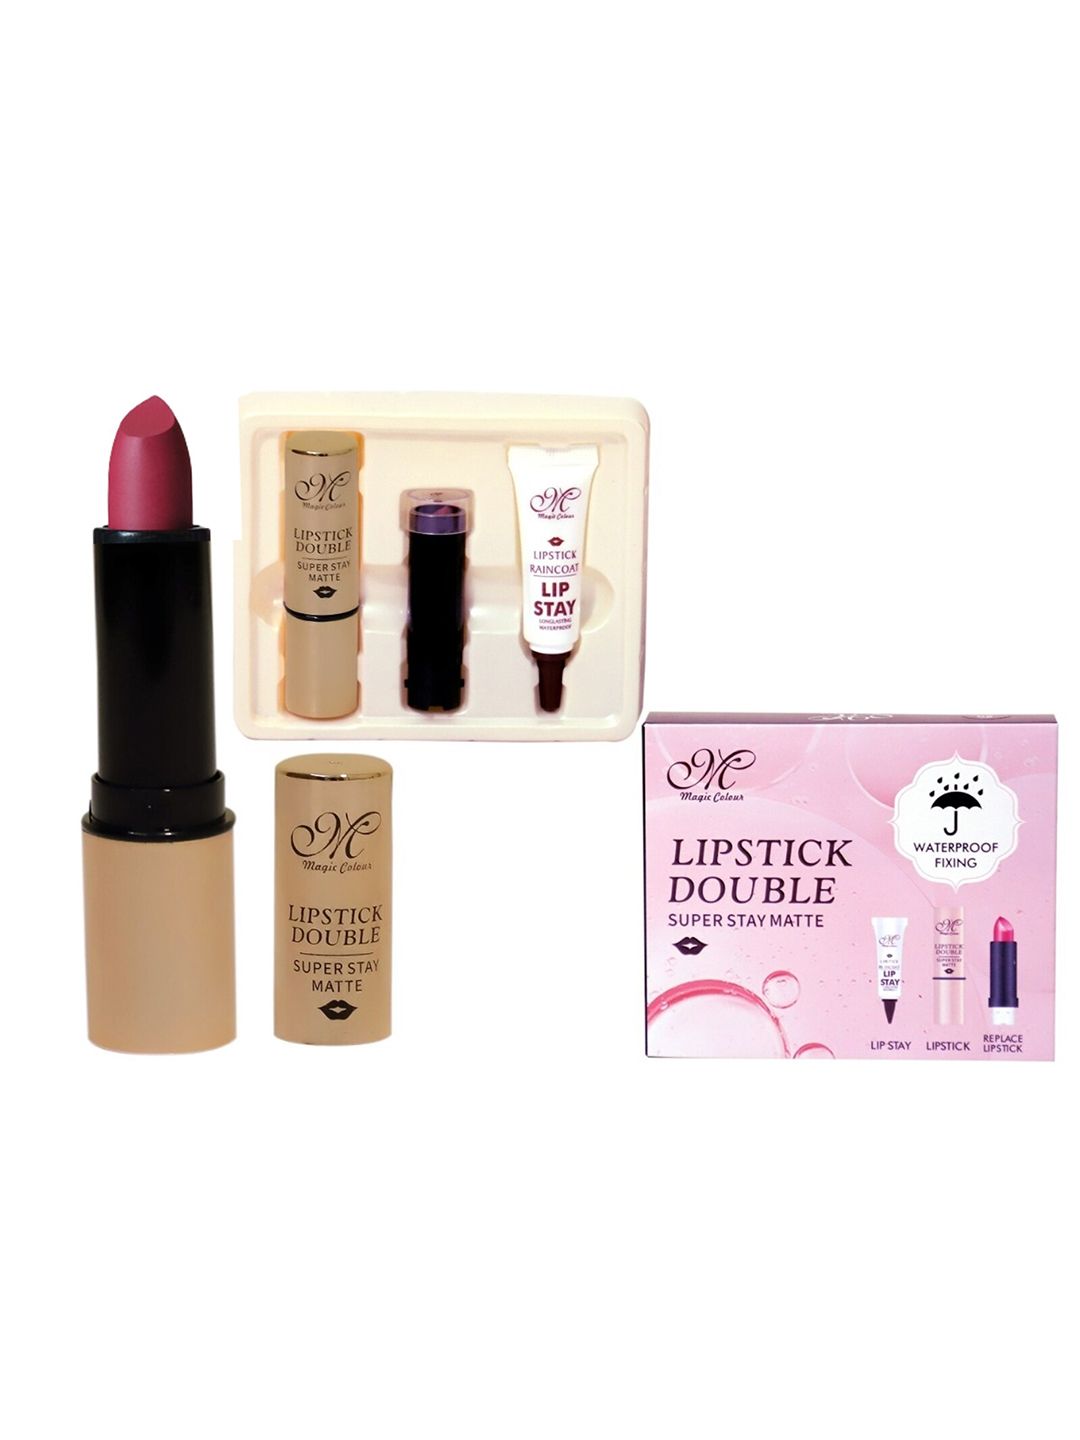 Magic Colour Transfer Proof Lipstick Double Kit 2 Lipsticks + 1 Lip Stay Gel 15.6gm Price in India